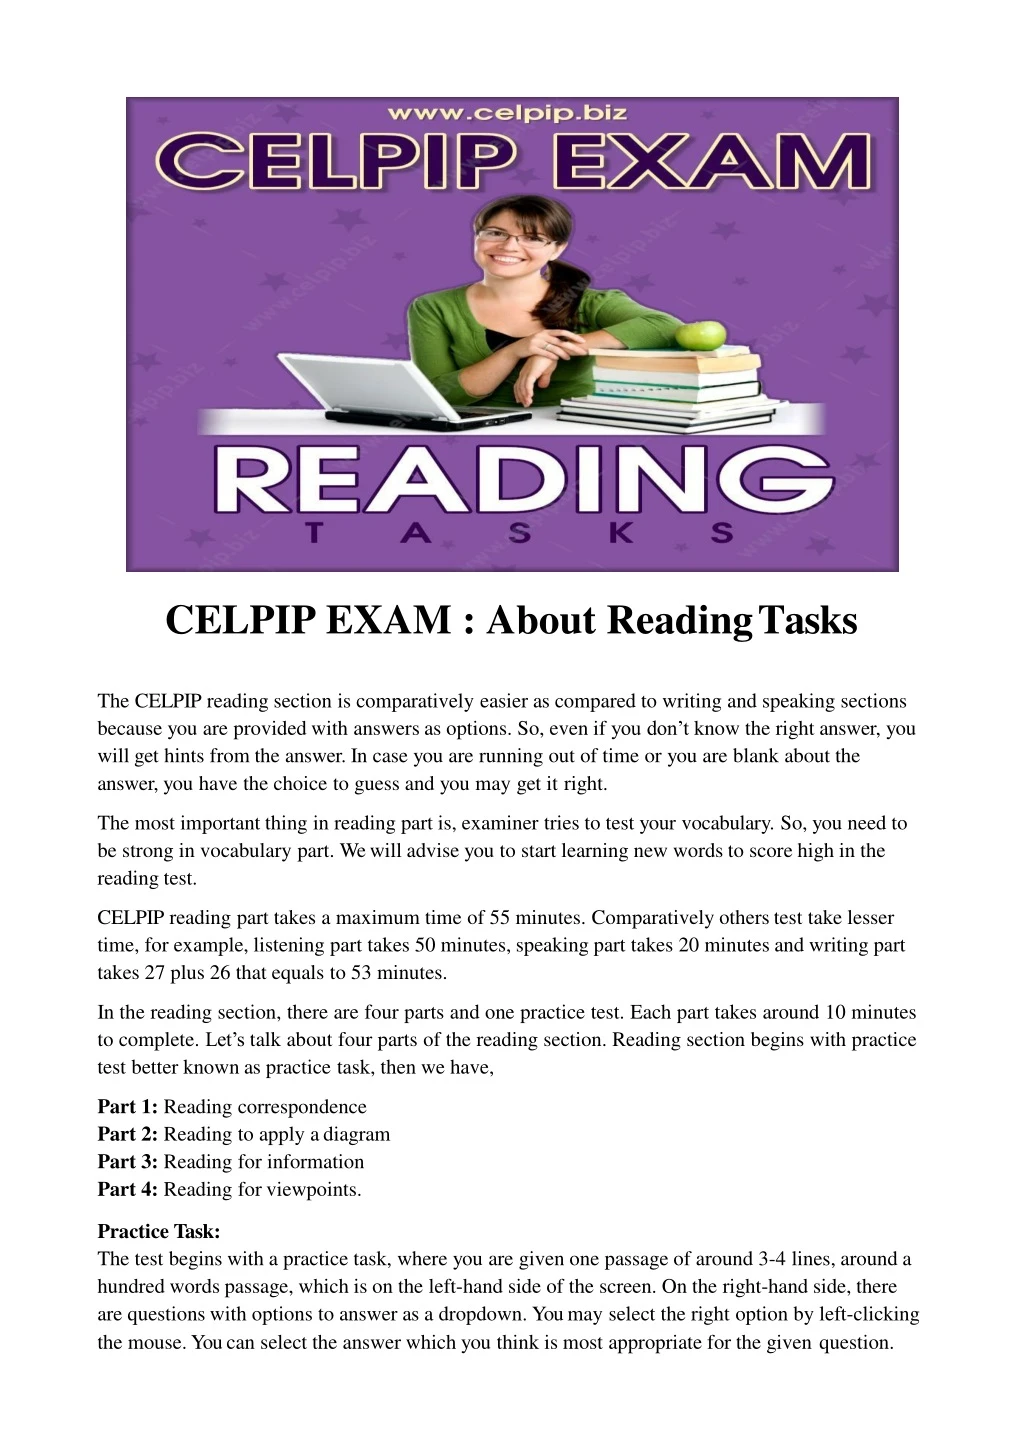 celpip exam about reading tasks